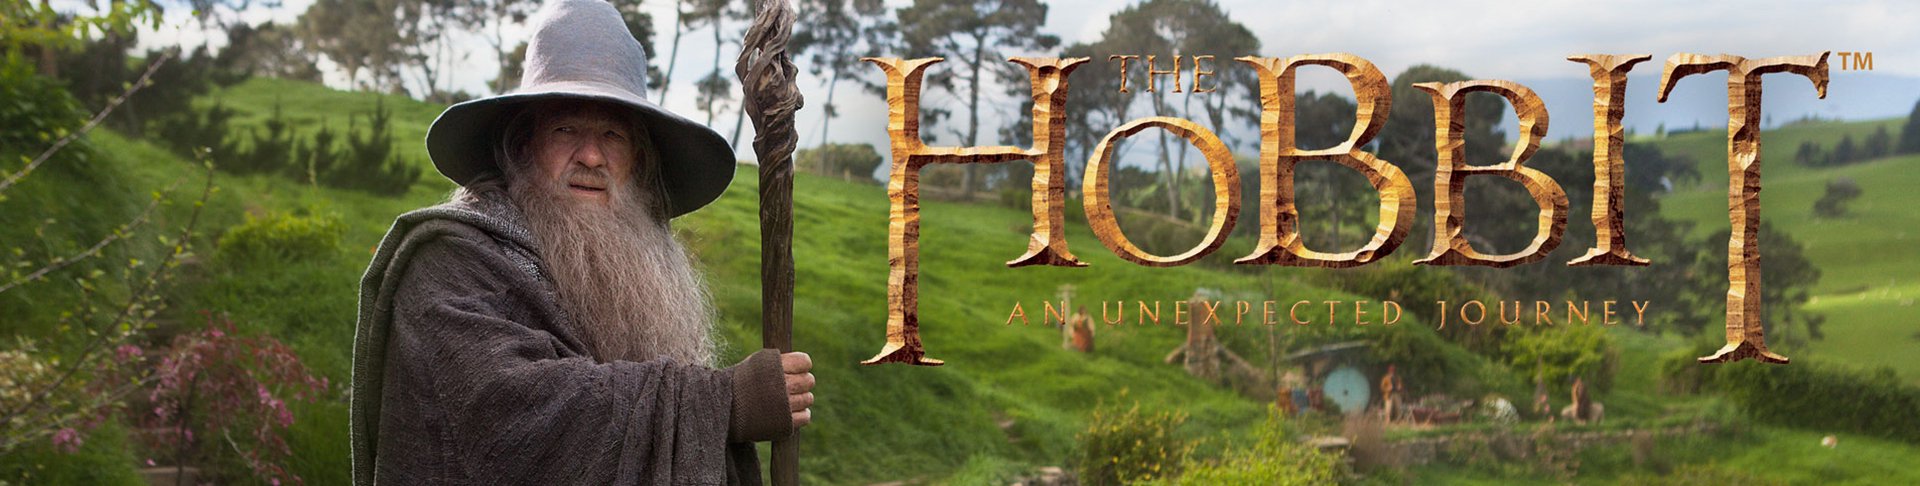 The Hobbit 1 Stream